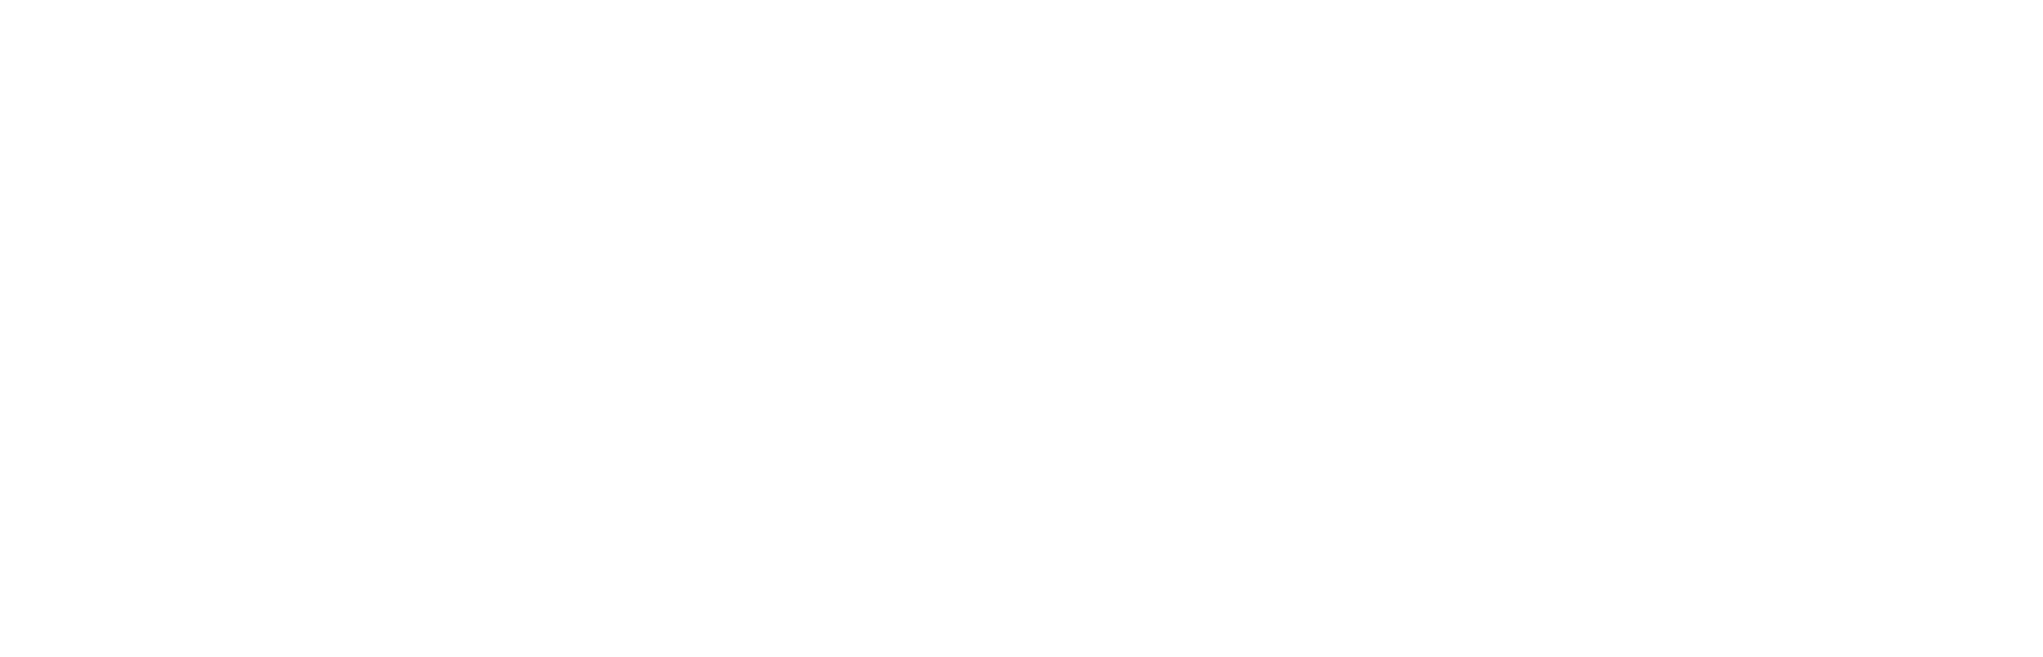 Logo GB blanco nuevo